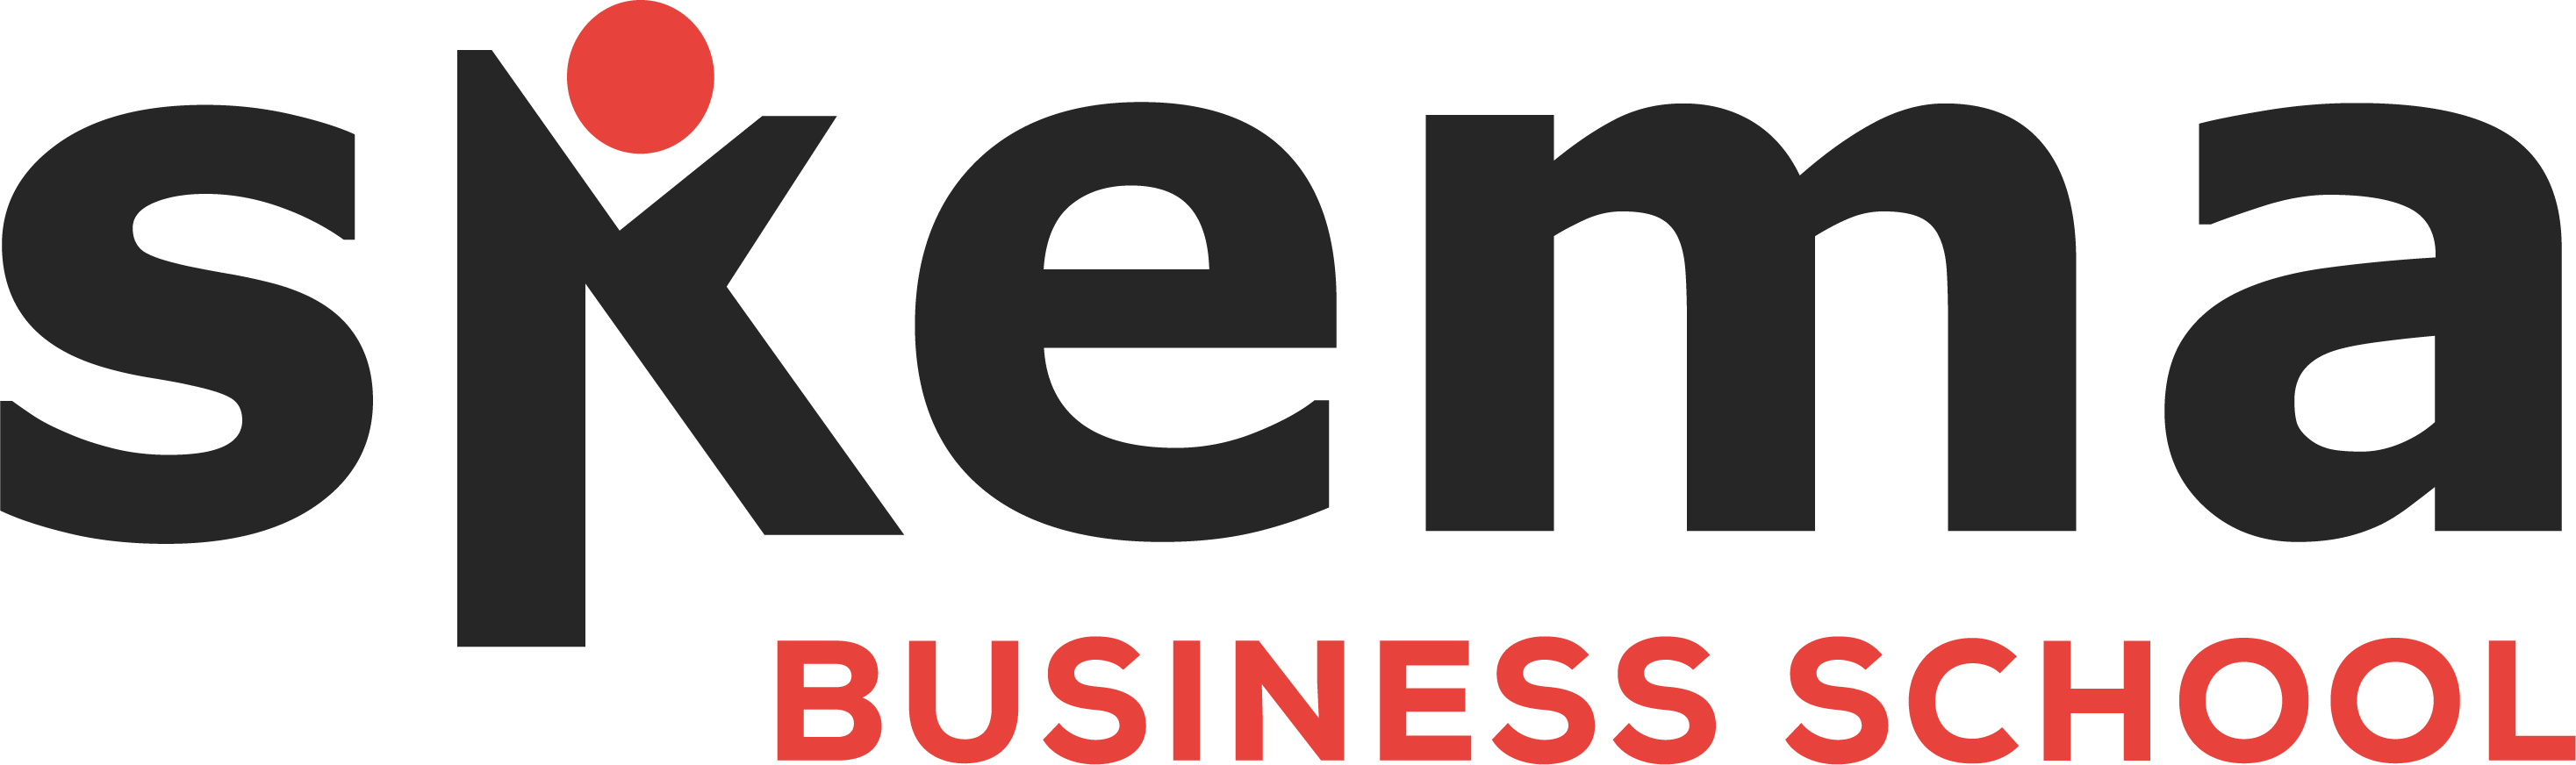 Logo of SKEMA Business School